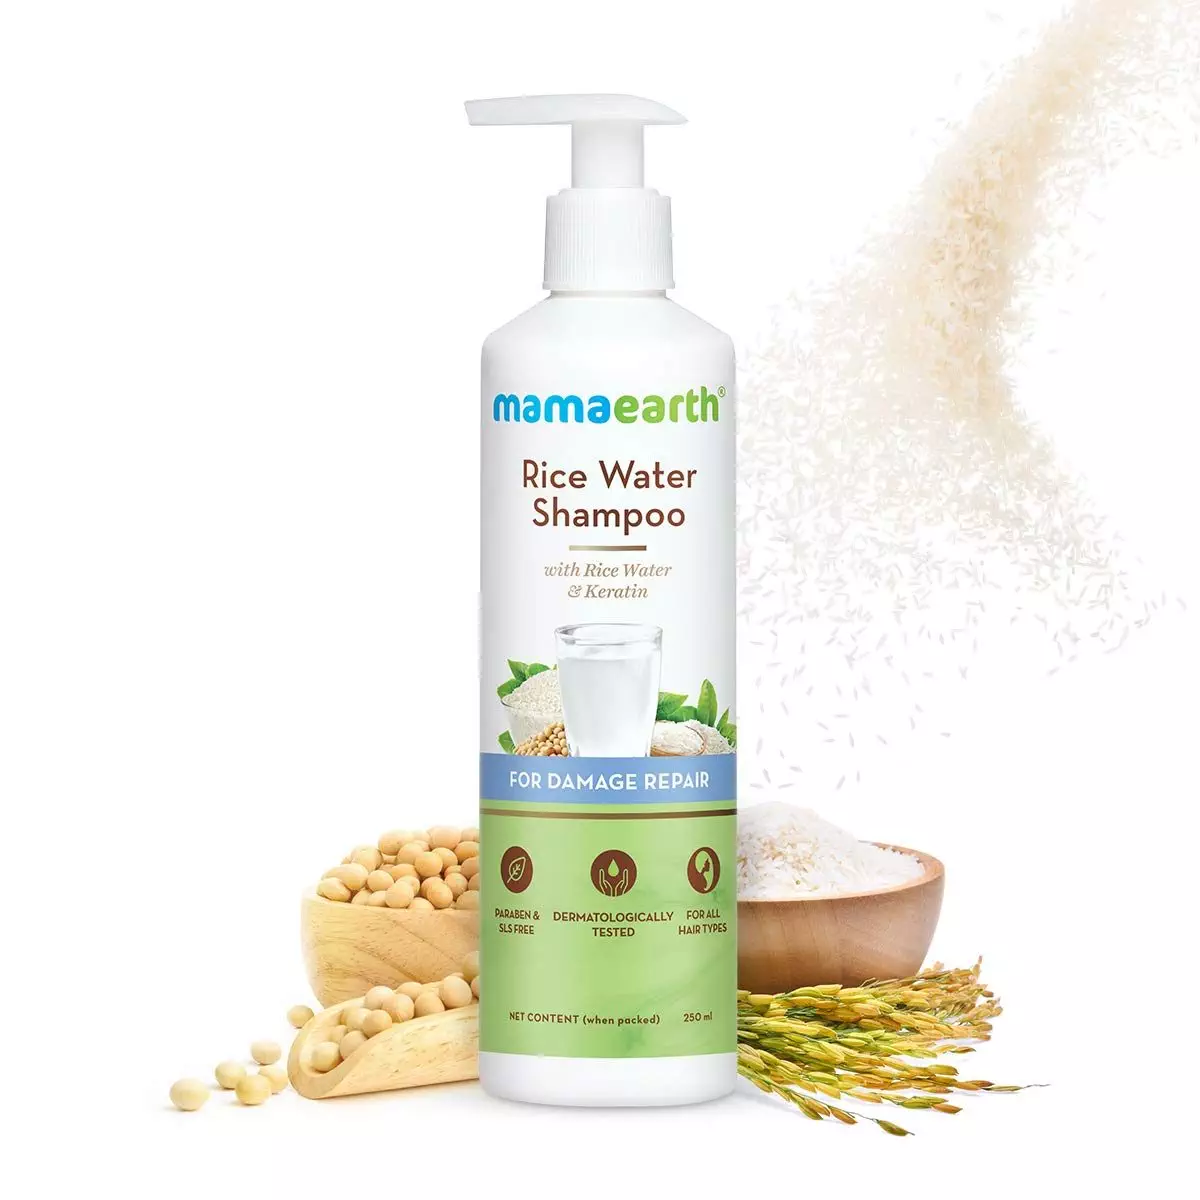 Mamaearth Rice Water Shampoo Review 9